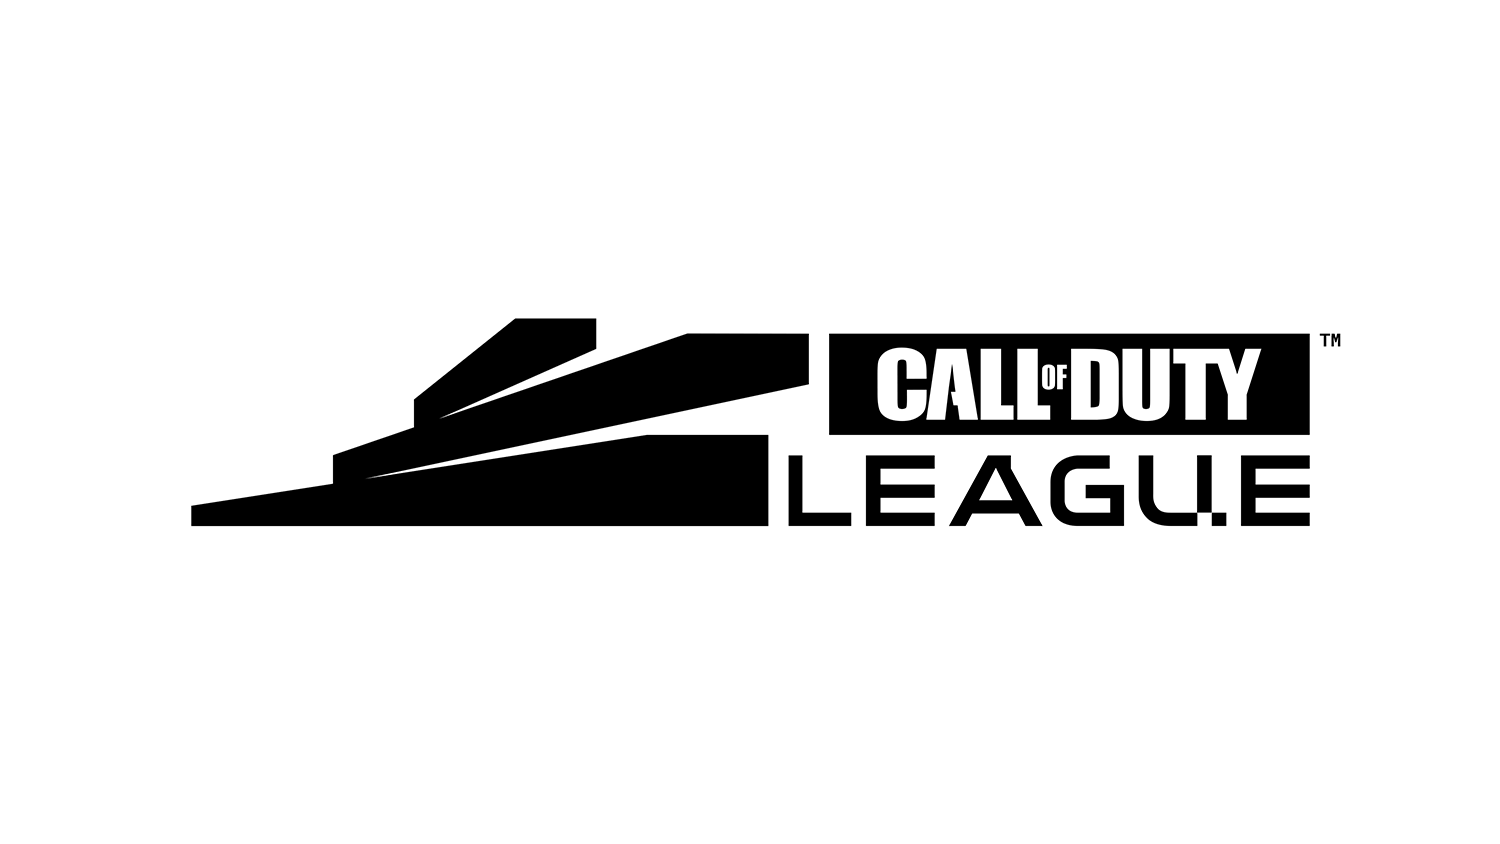 Call of Duty League to start 2021 season in February, host Kickoff